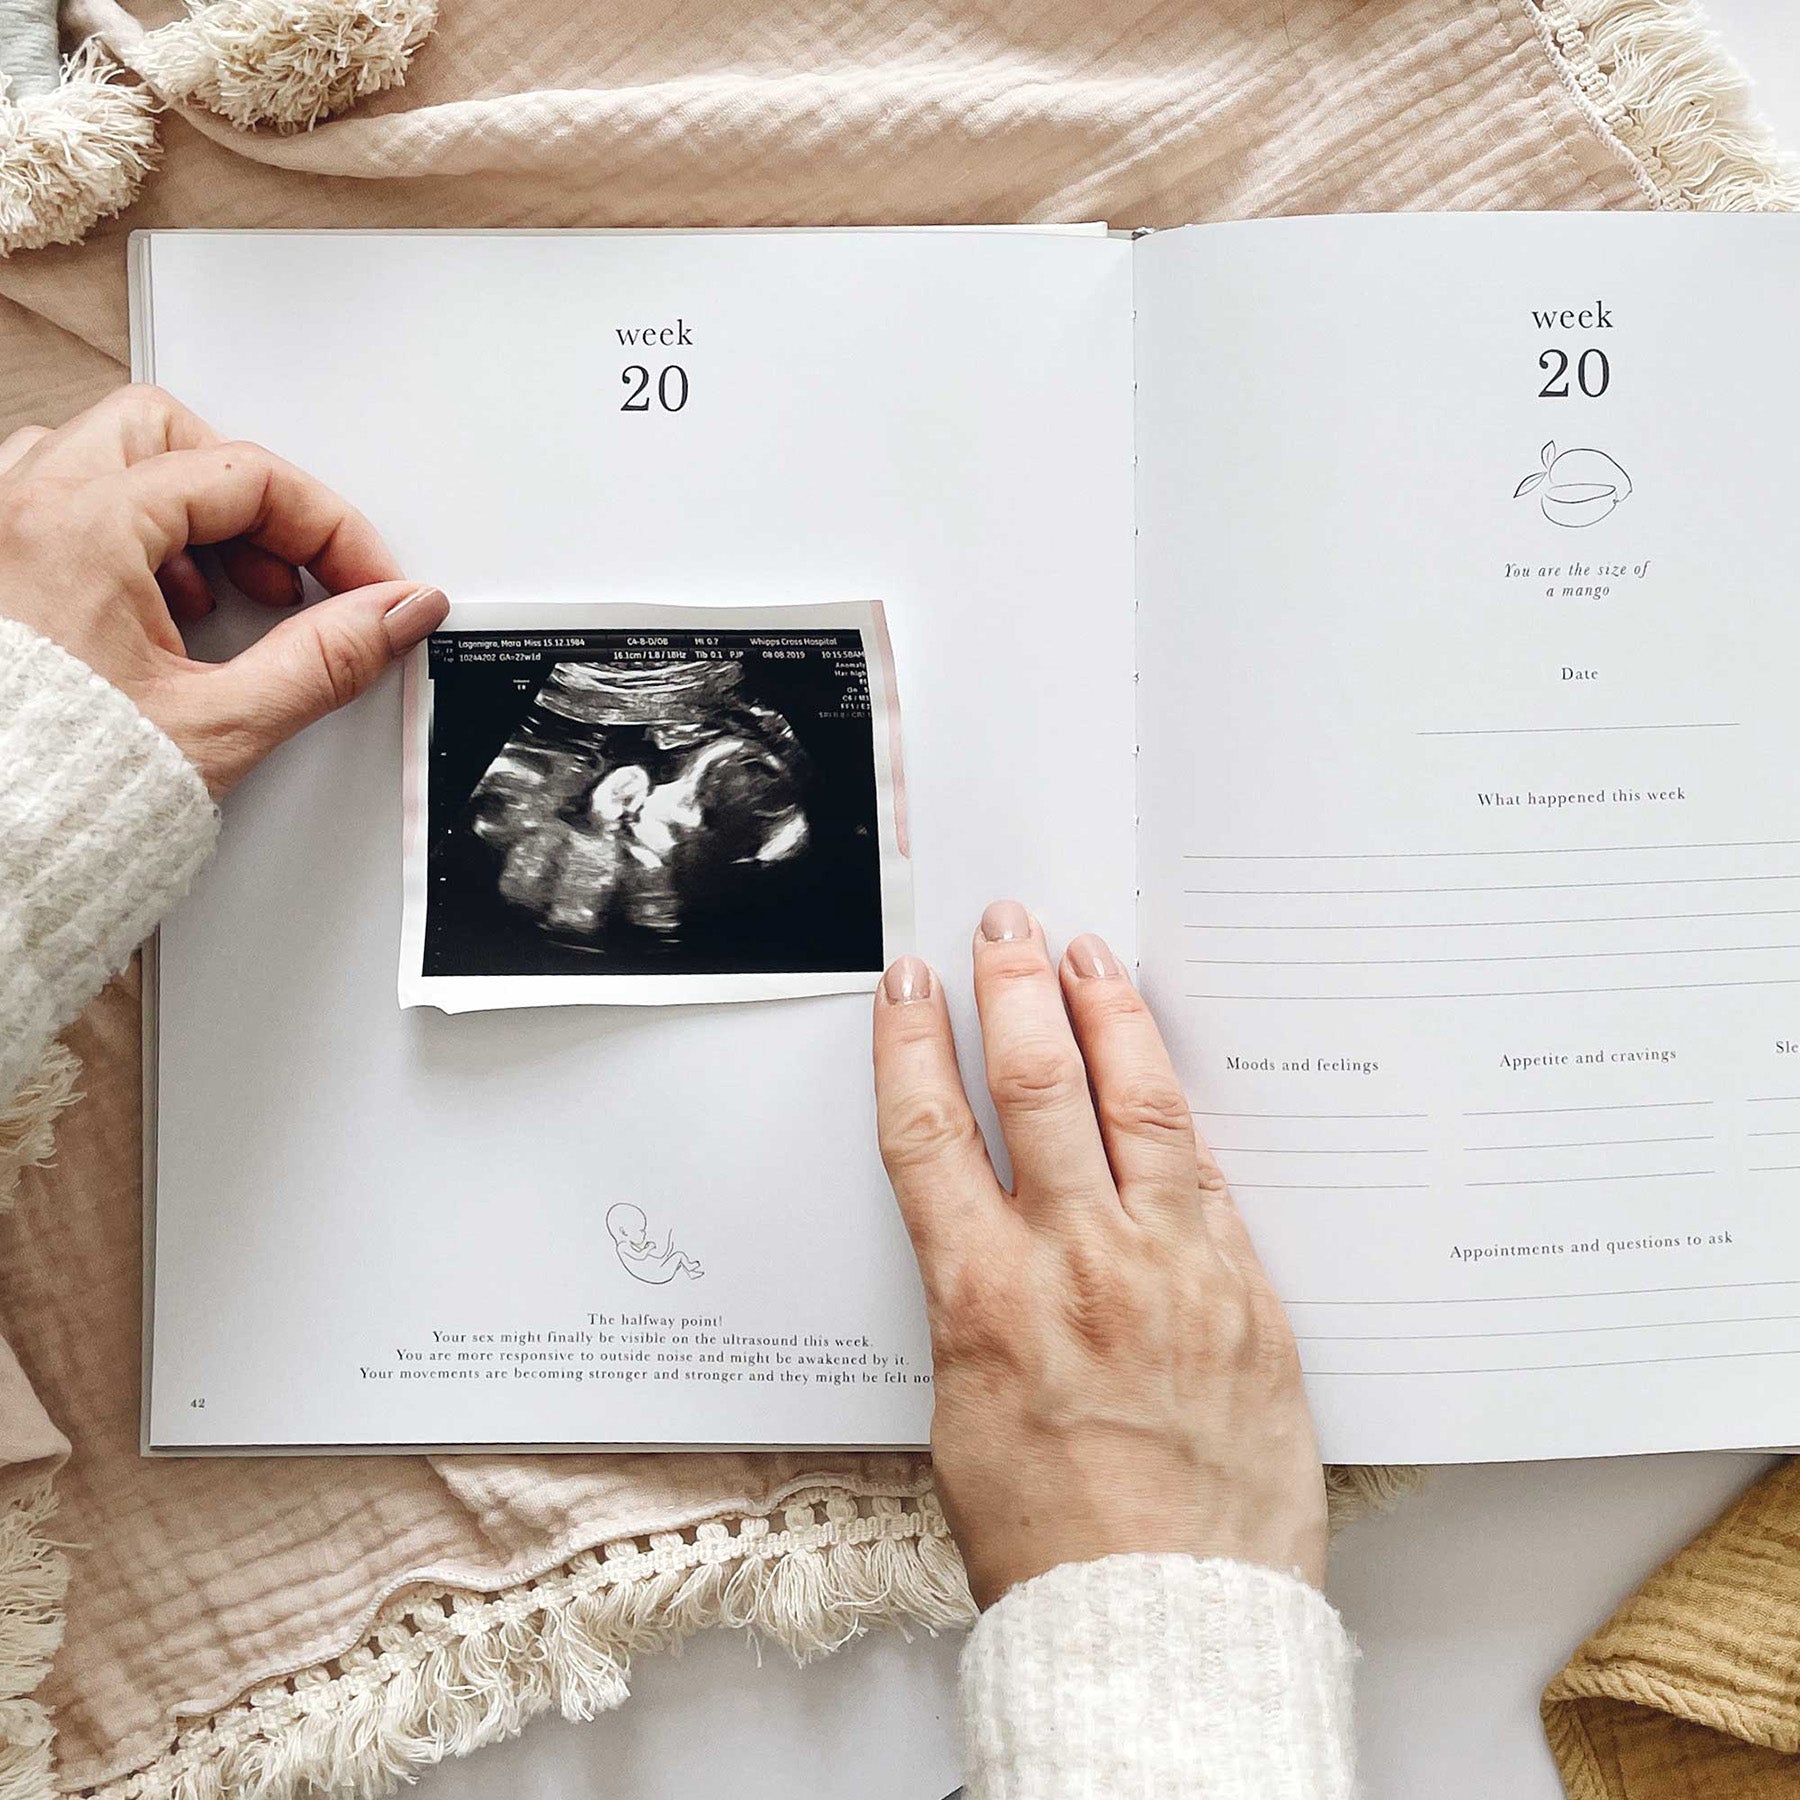 Pregnancy diary